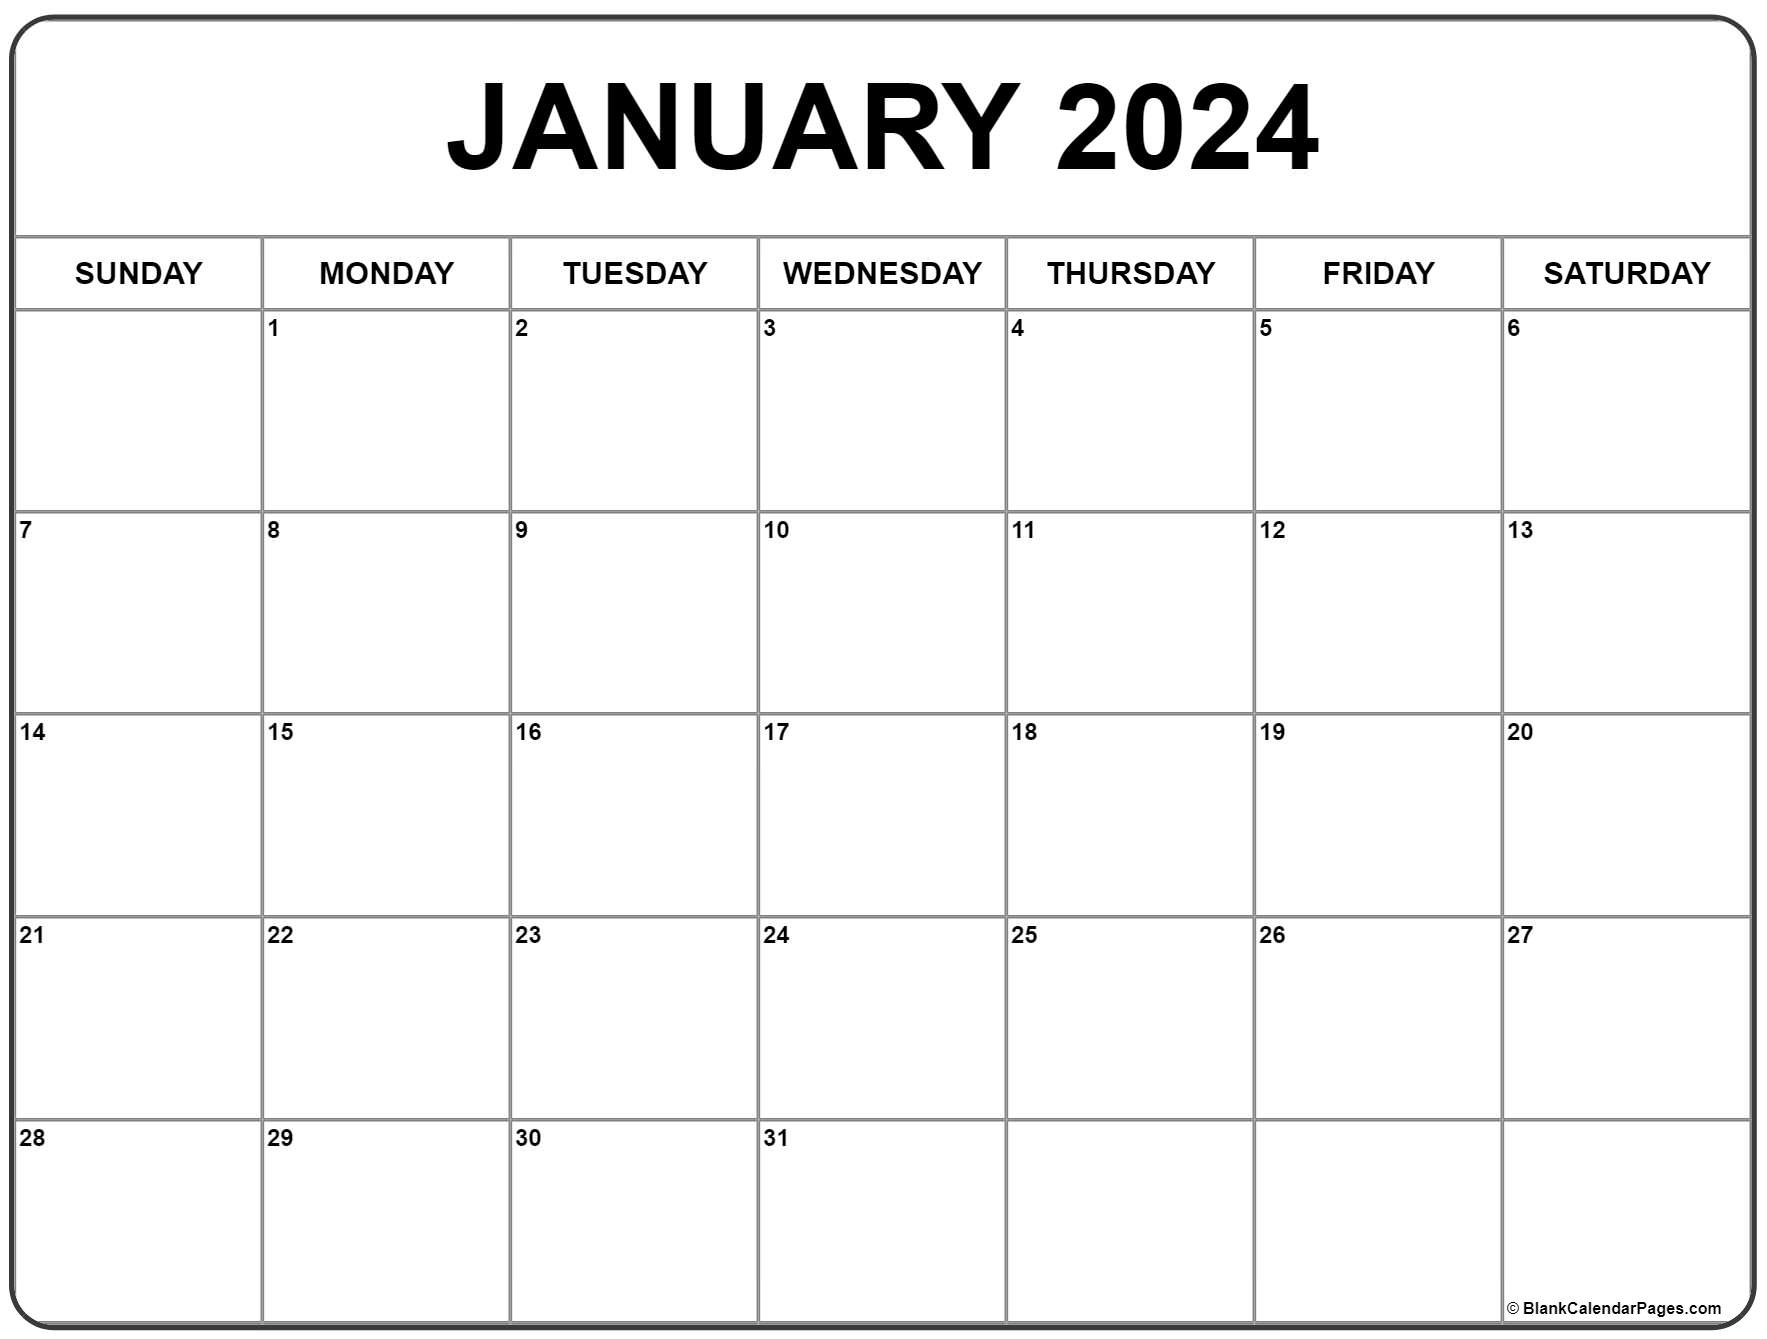 January 2024 Calendar | Free Printable Calendar for Monthly Calendar Printable 2024